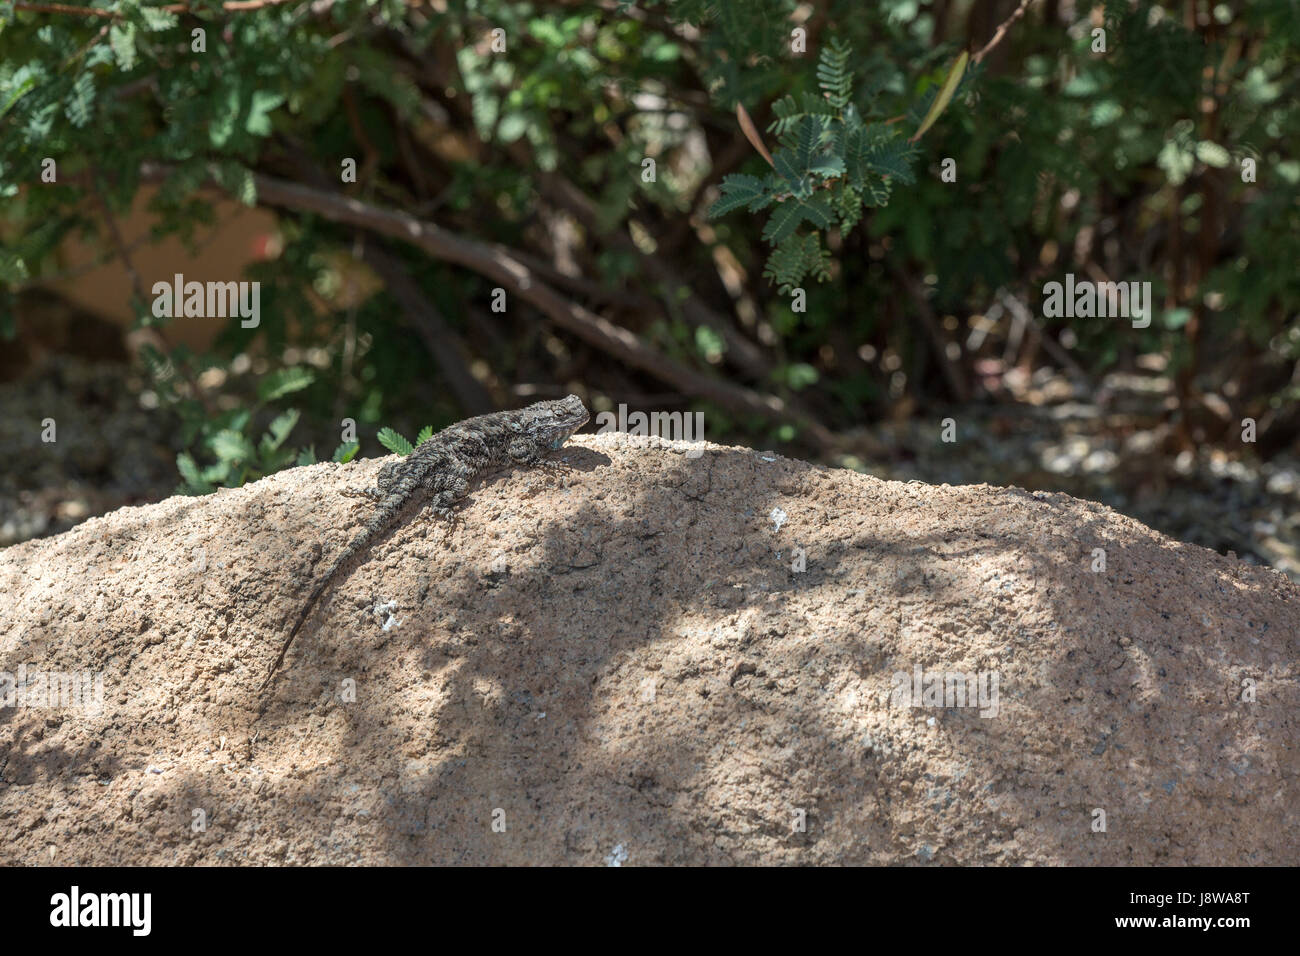 Clark's spiny lizard  (Sceloporus clarkii) on rock Stock Photo